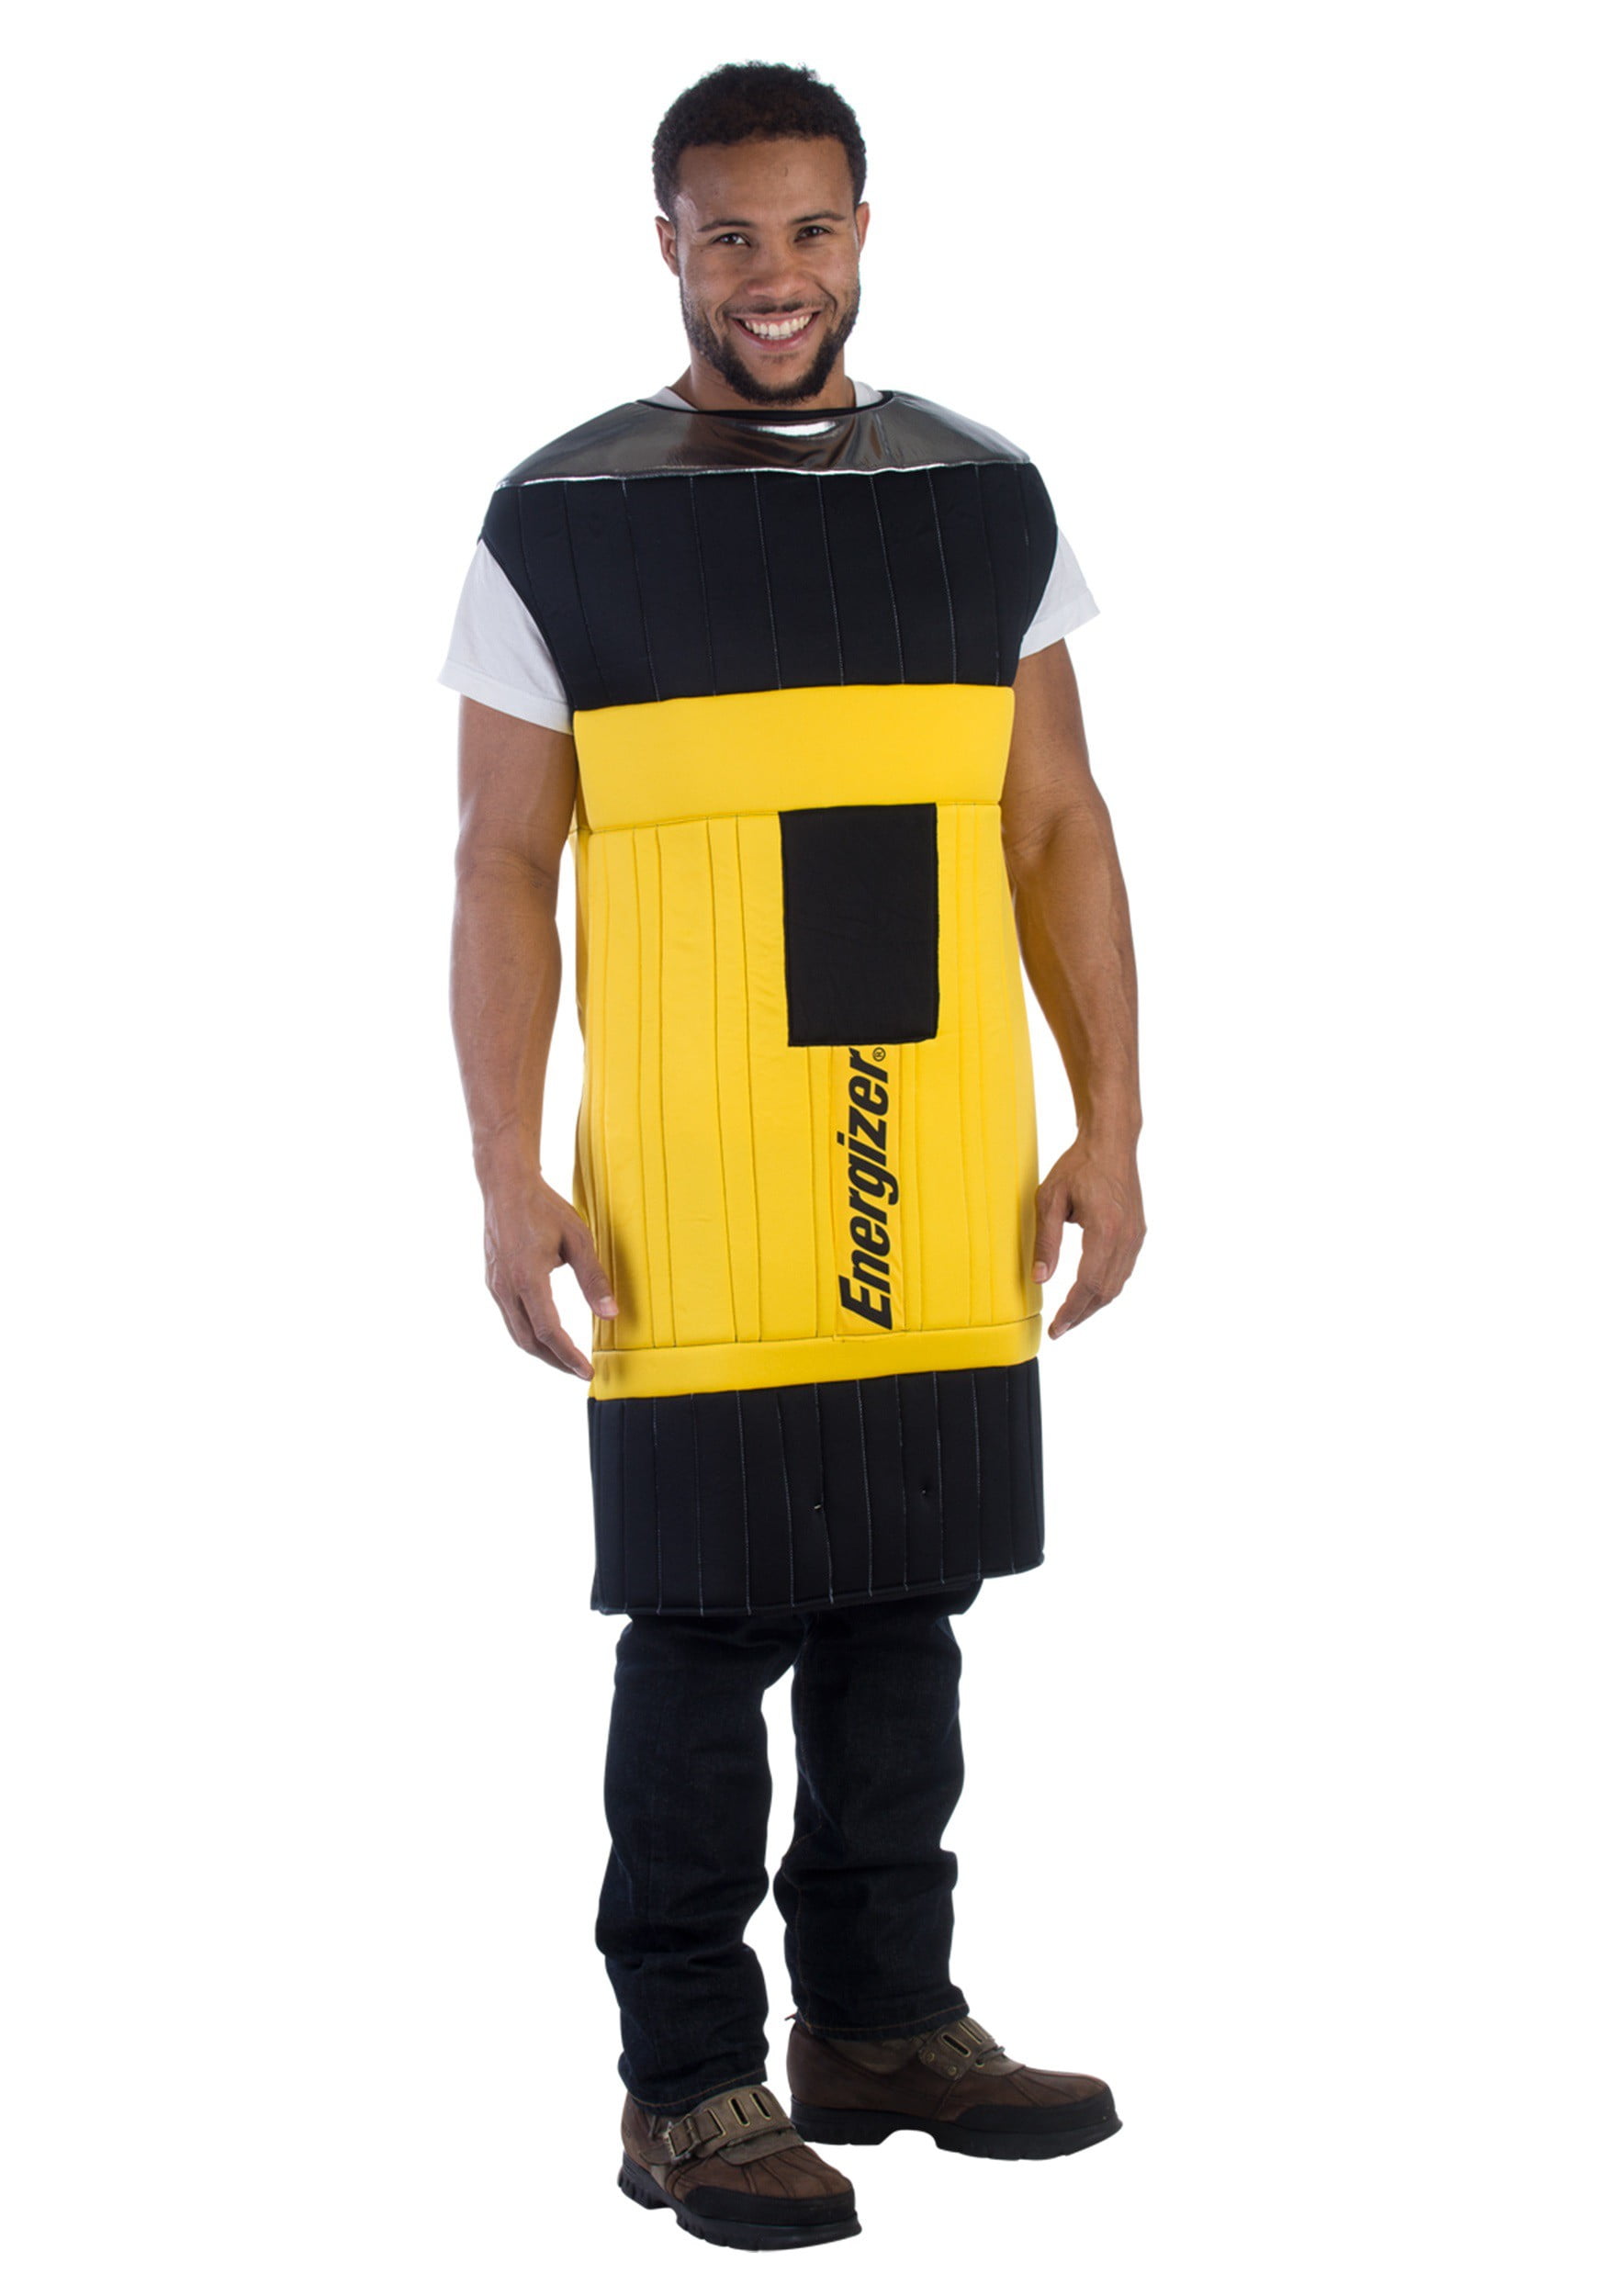 Men's Energizer Batterie en costume Dress Up America 